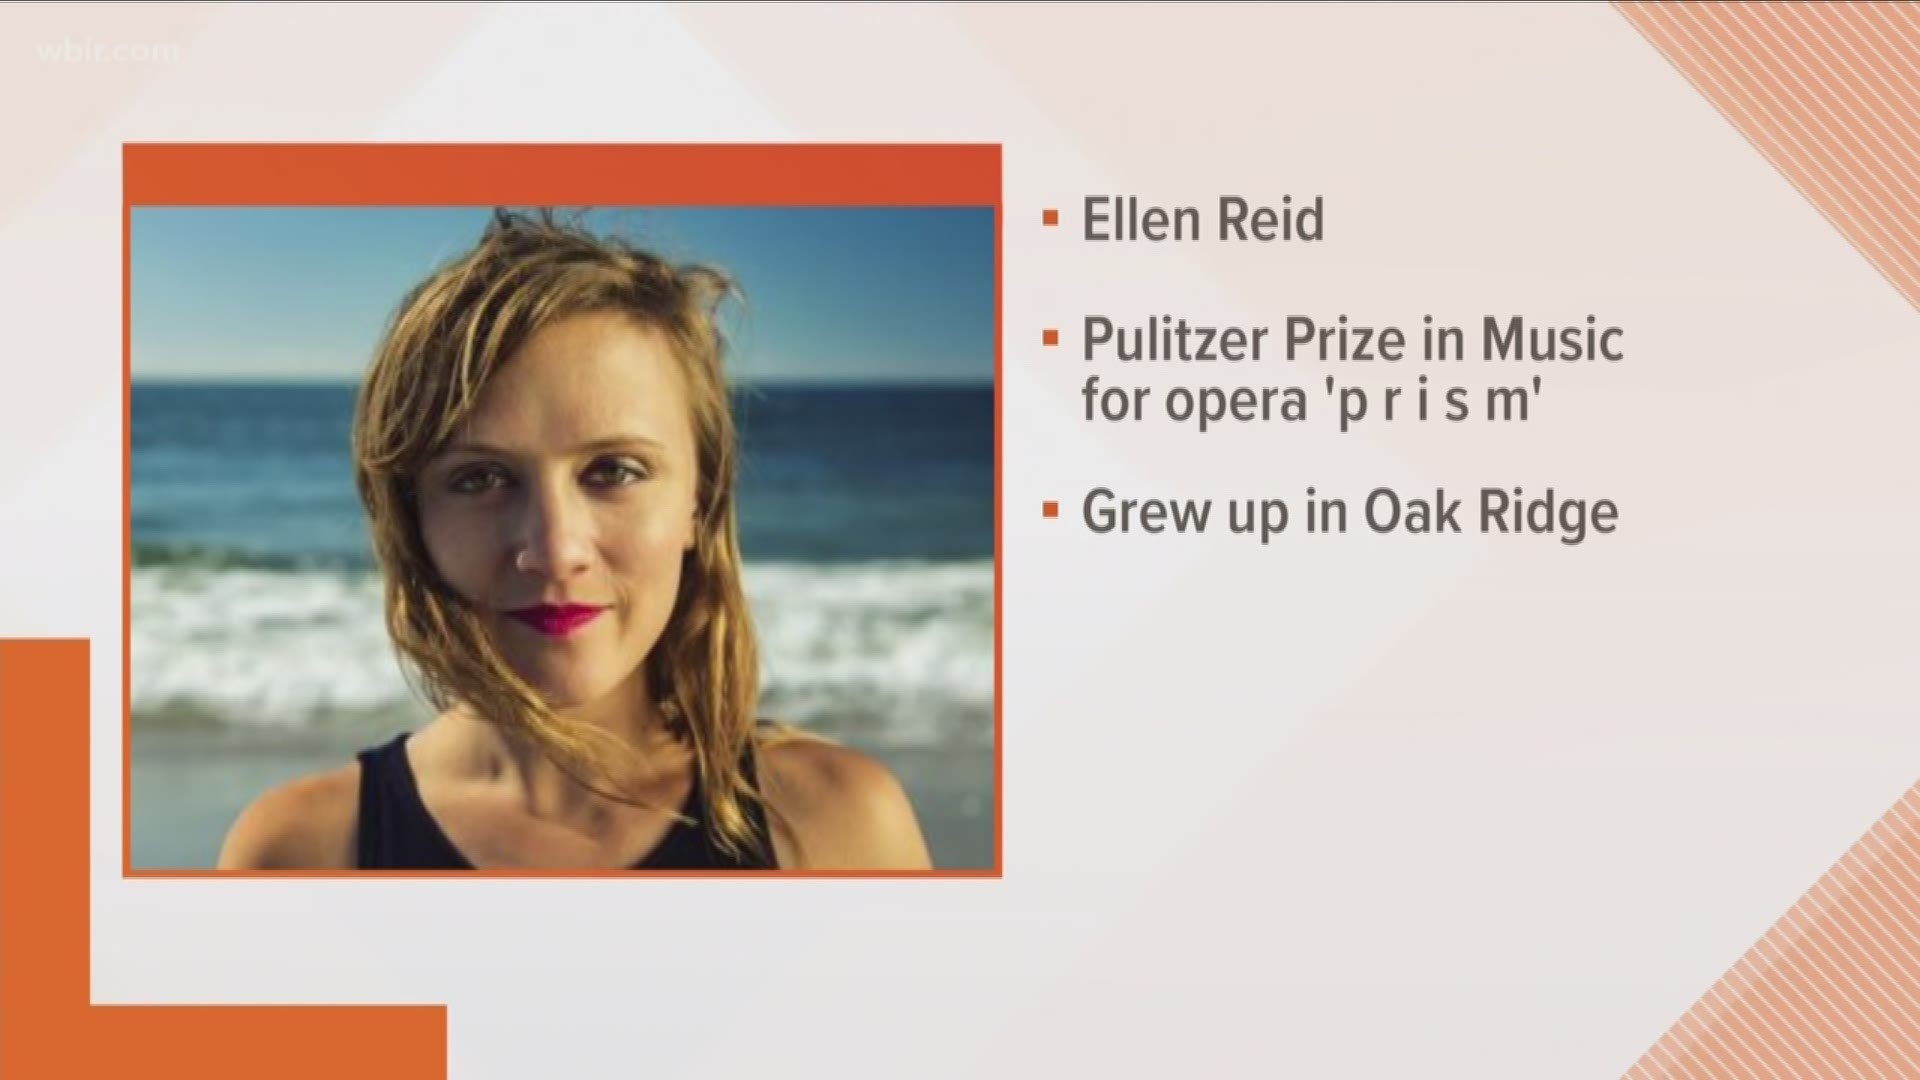 Oak Ridge native Ellen Reid was given the Pulitzer Prize in Music for her opera "prism".